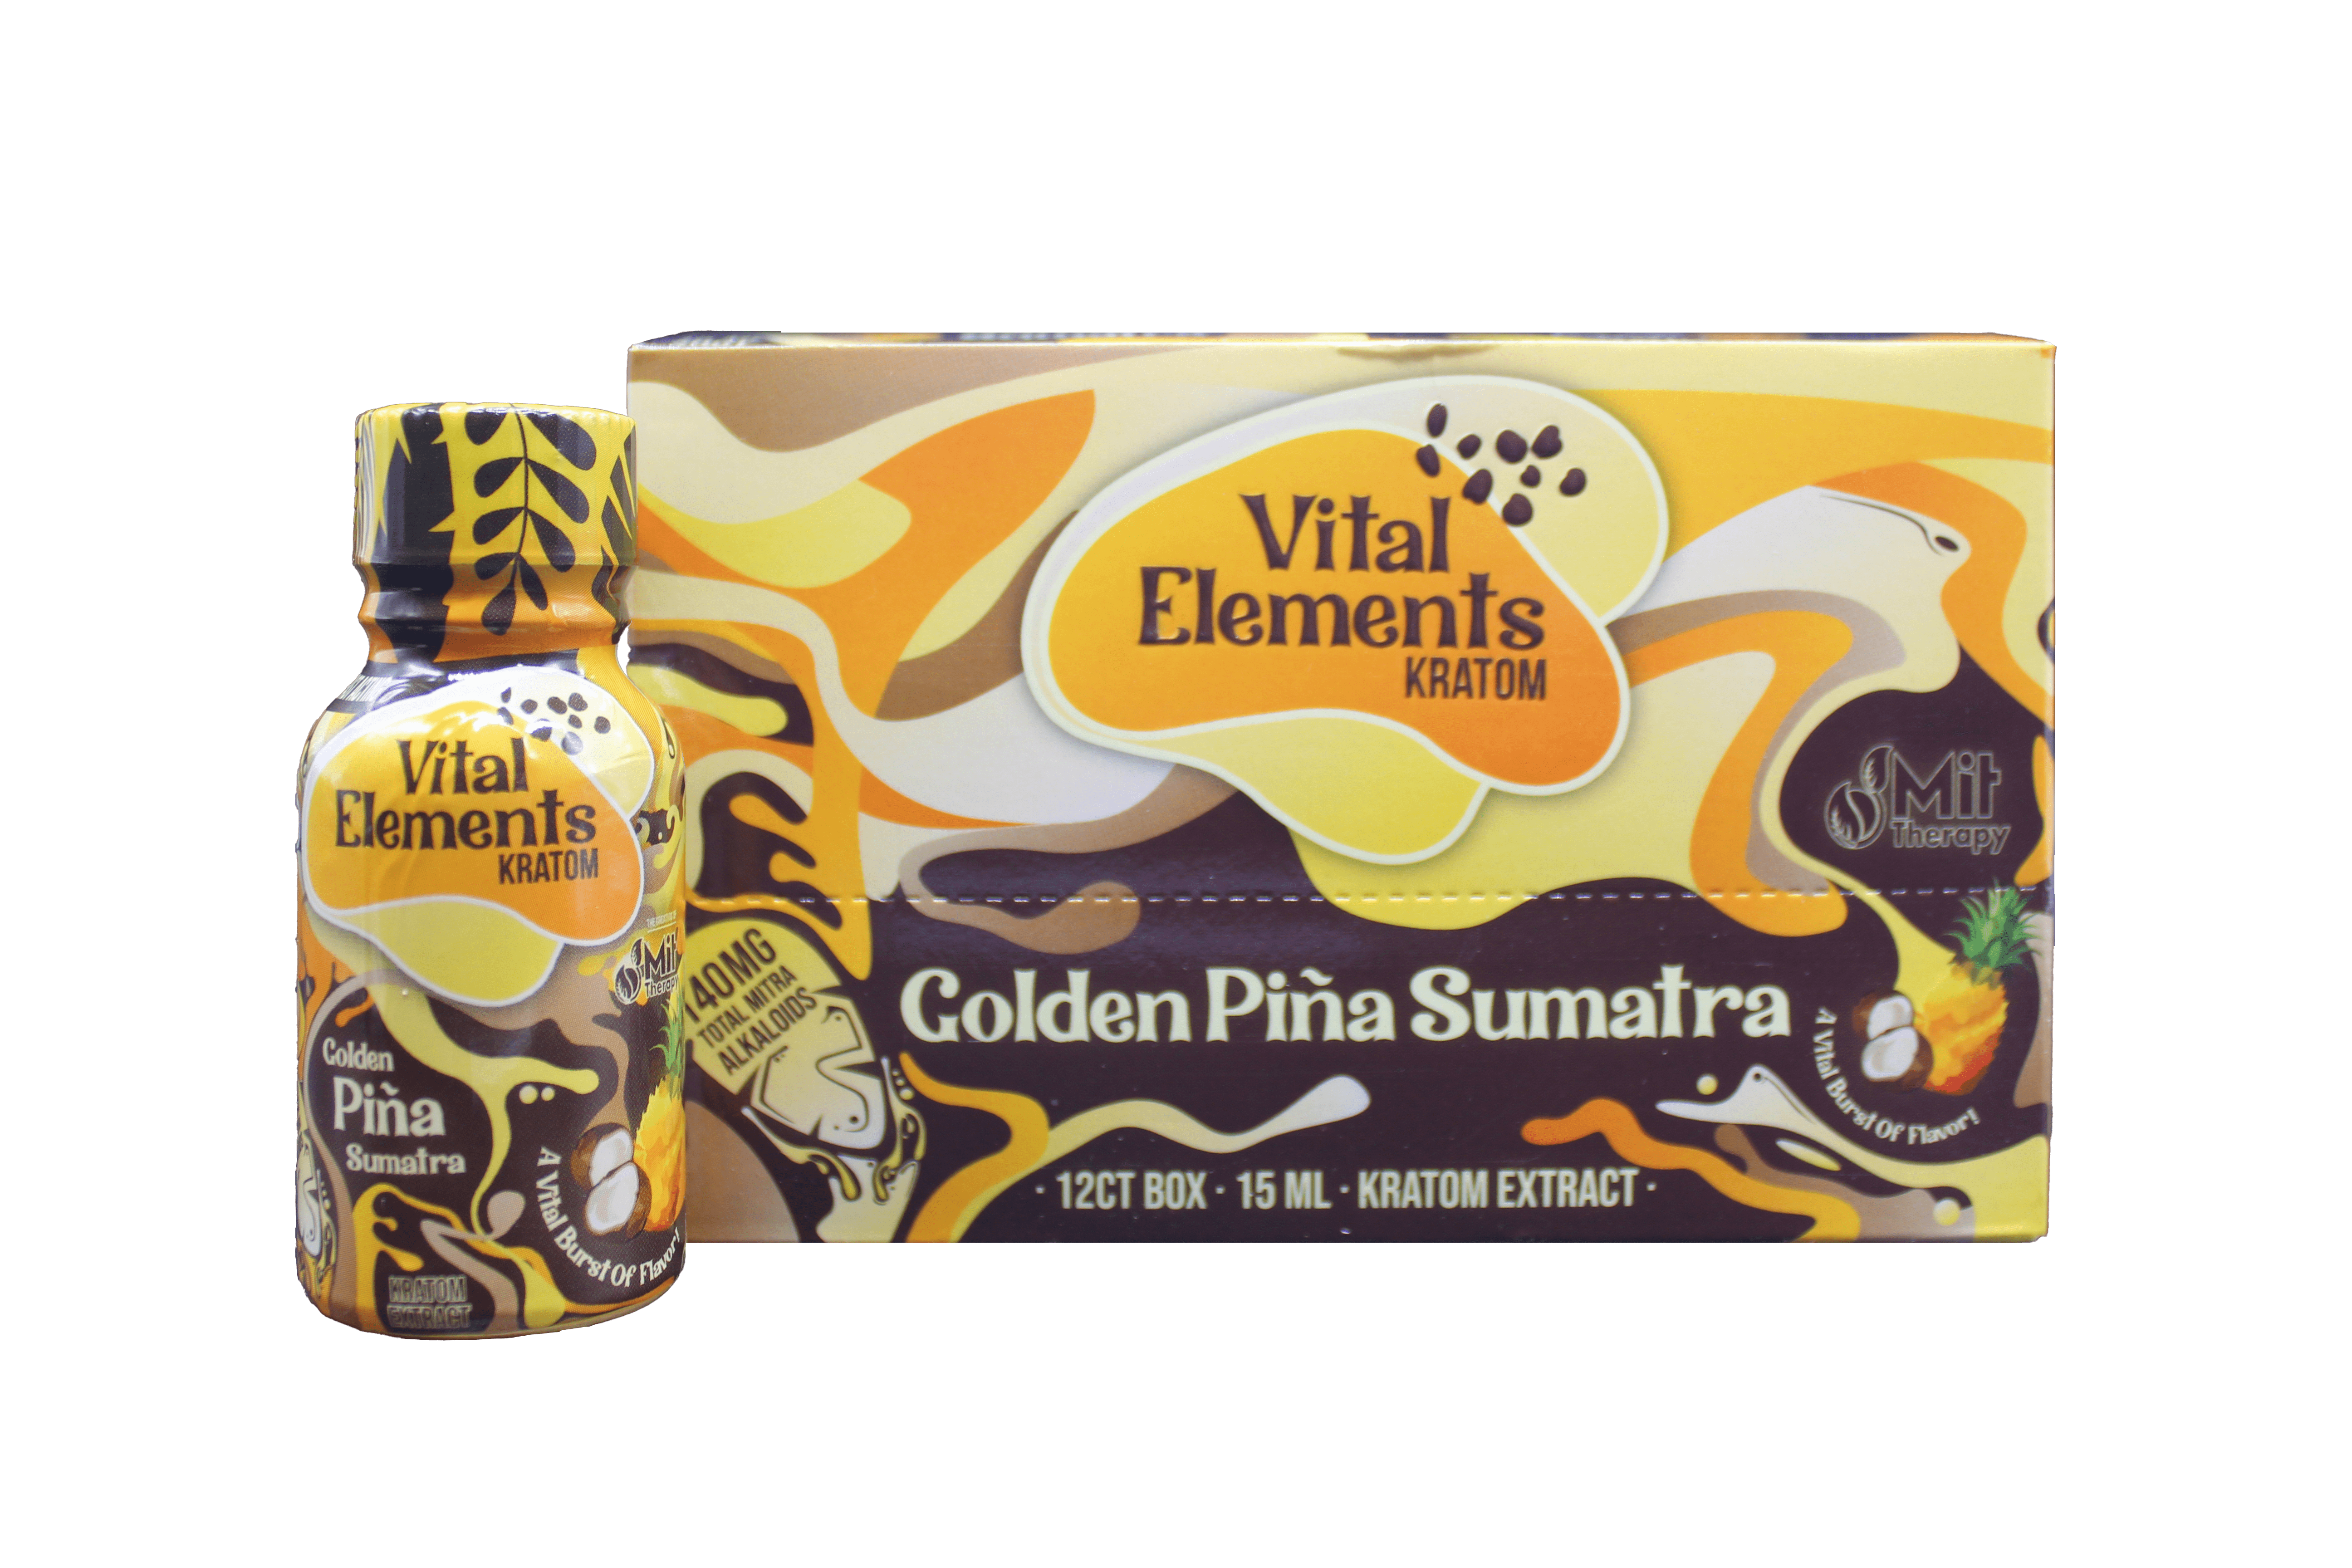 *Vital Elements Extract Shot Golden Pina Sumatra*